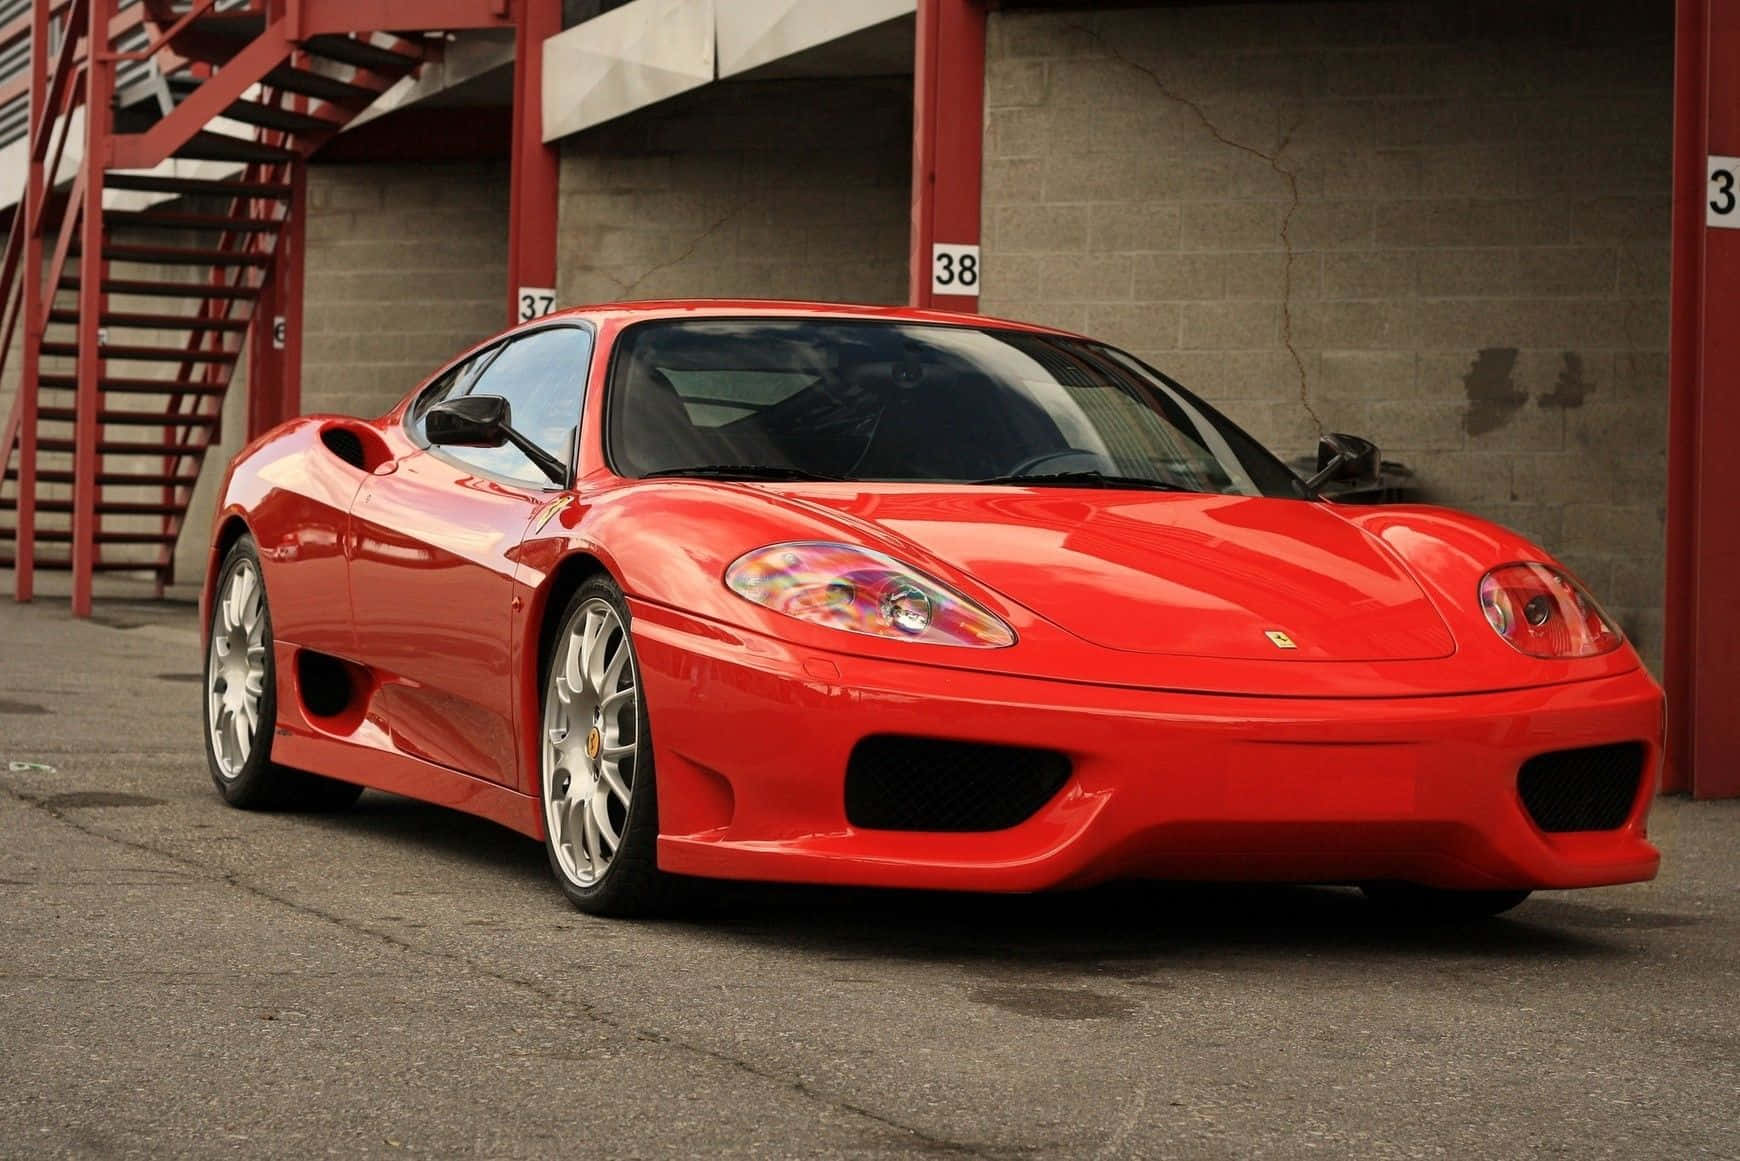 Caption: Red Ferrari 360 Modena Speeding Down the Road Wallpaper